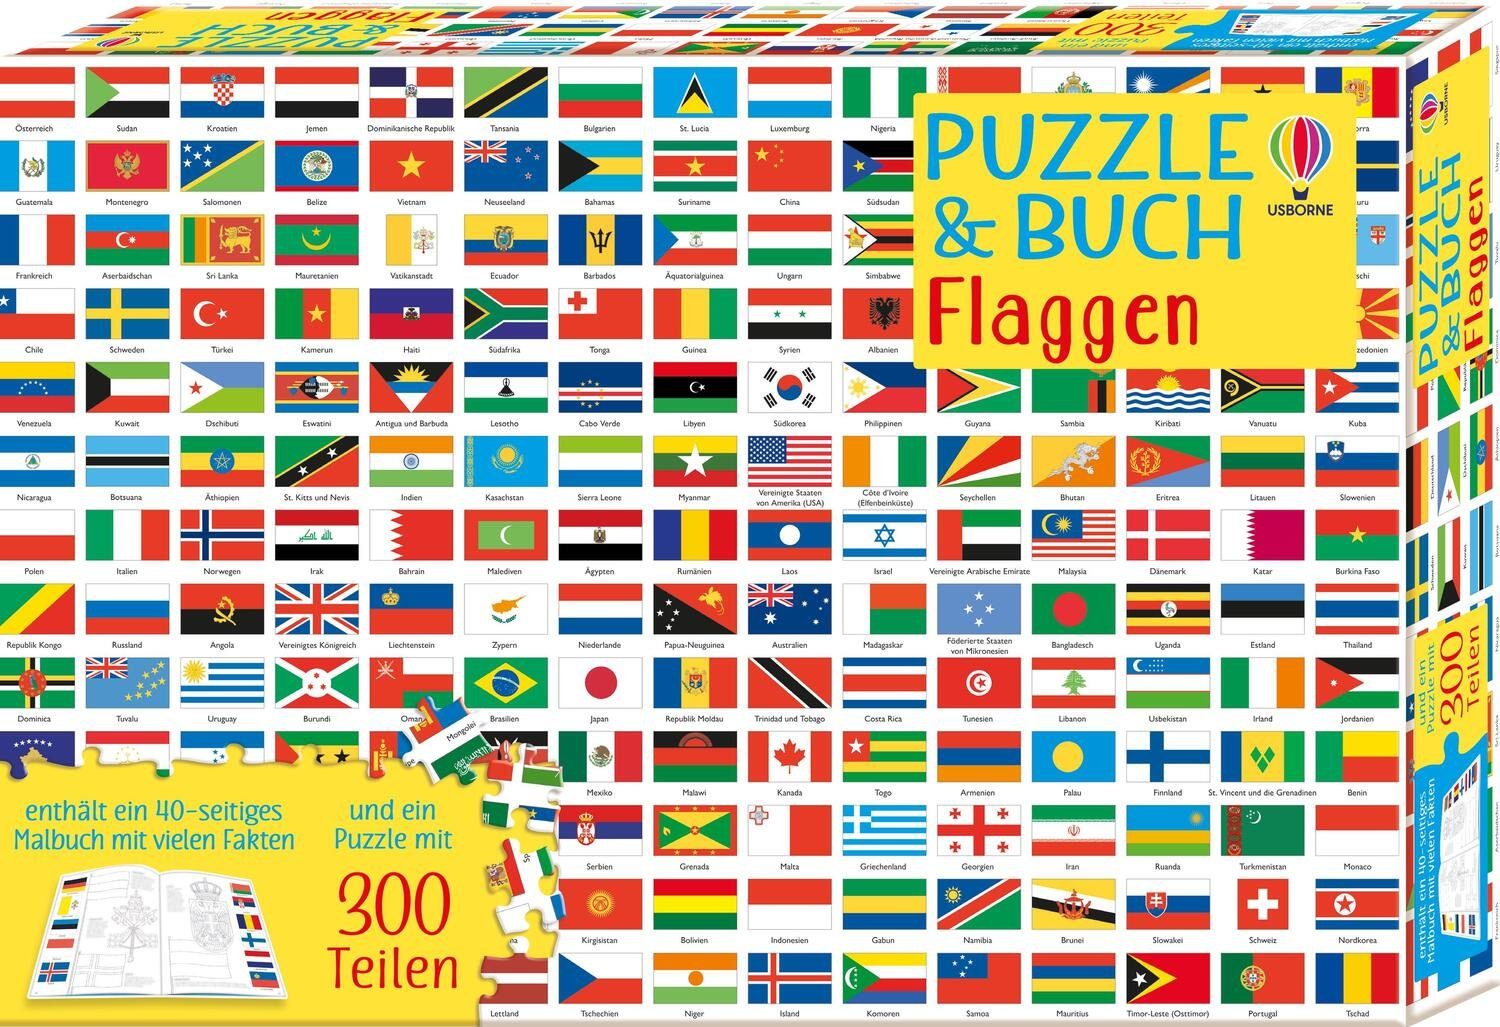 Usborne Verlag Puzzle Puzzle & Buch: Flaggen, 200 Puzzleteile